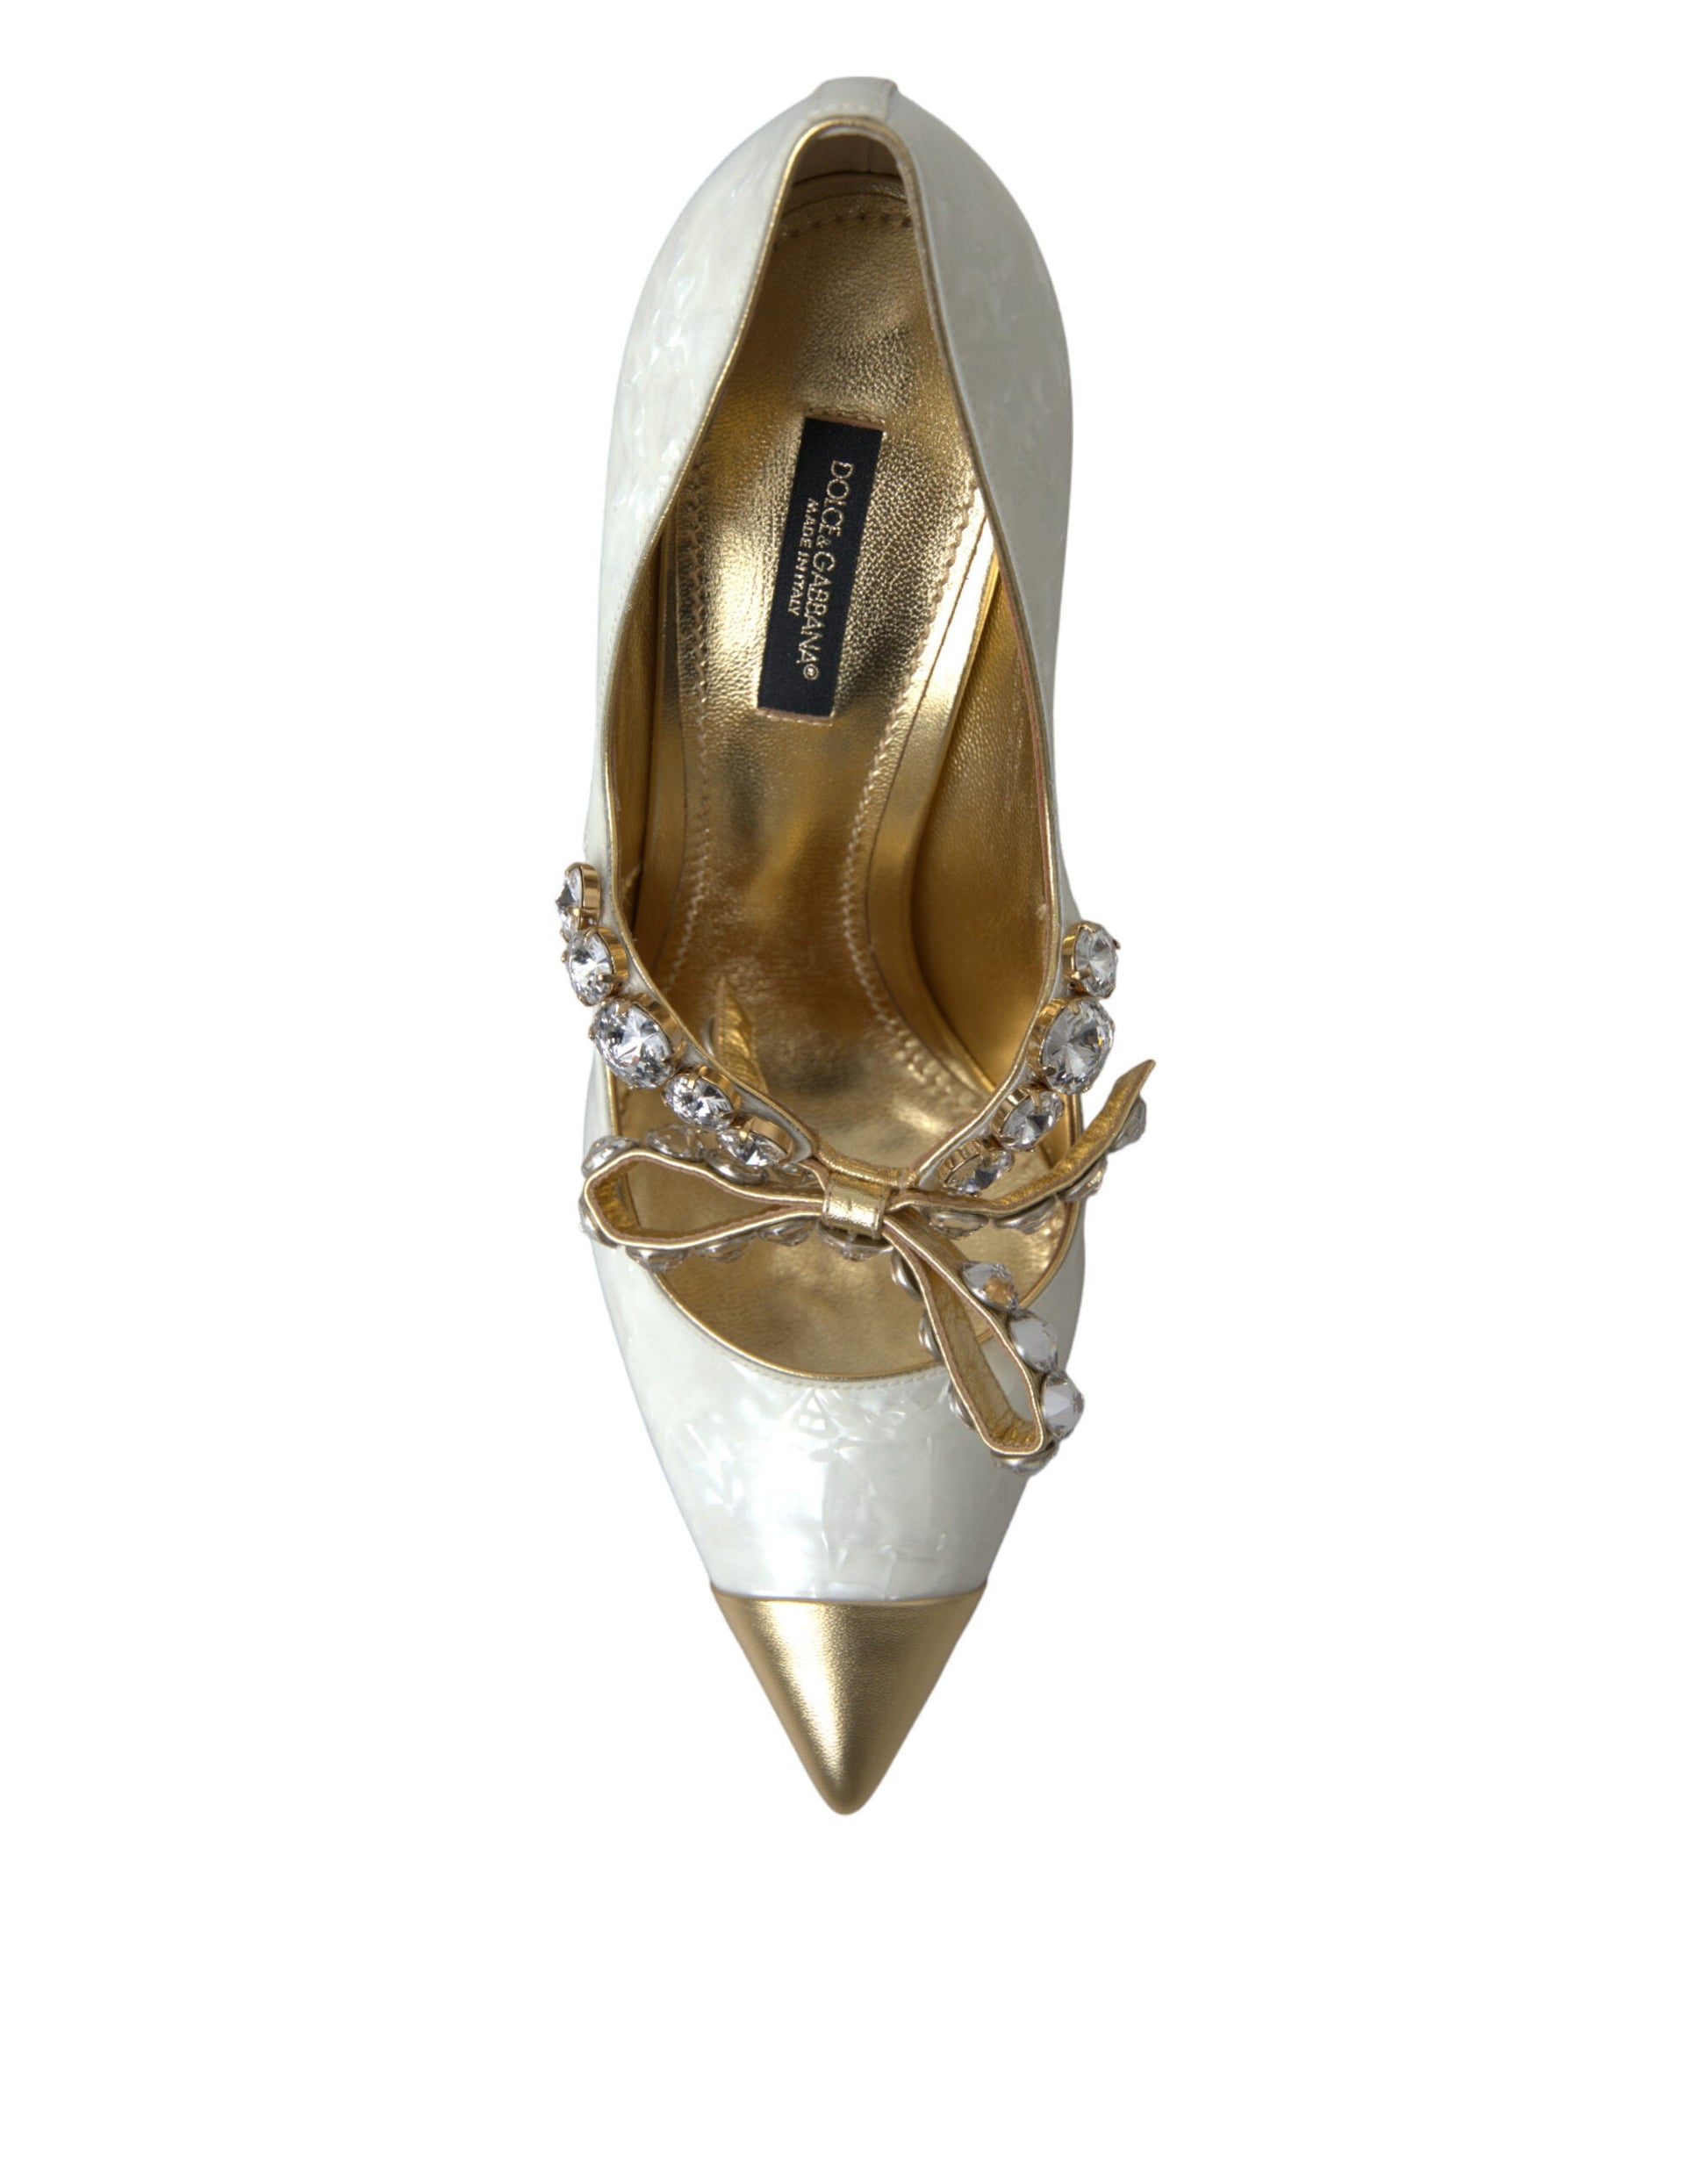 Dolce & Gabbana White Mary Jane Crystal Pearl Pumps Shoes | Fashionsarah.com